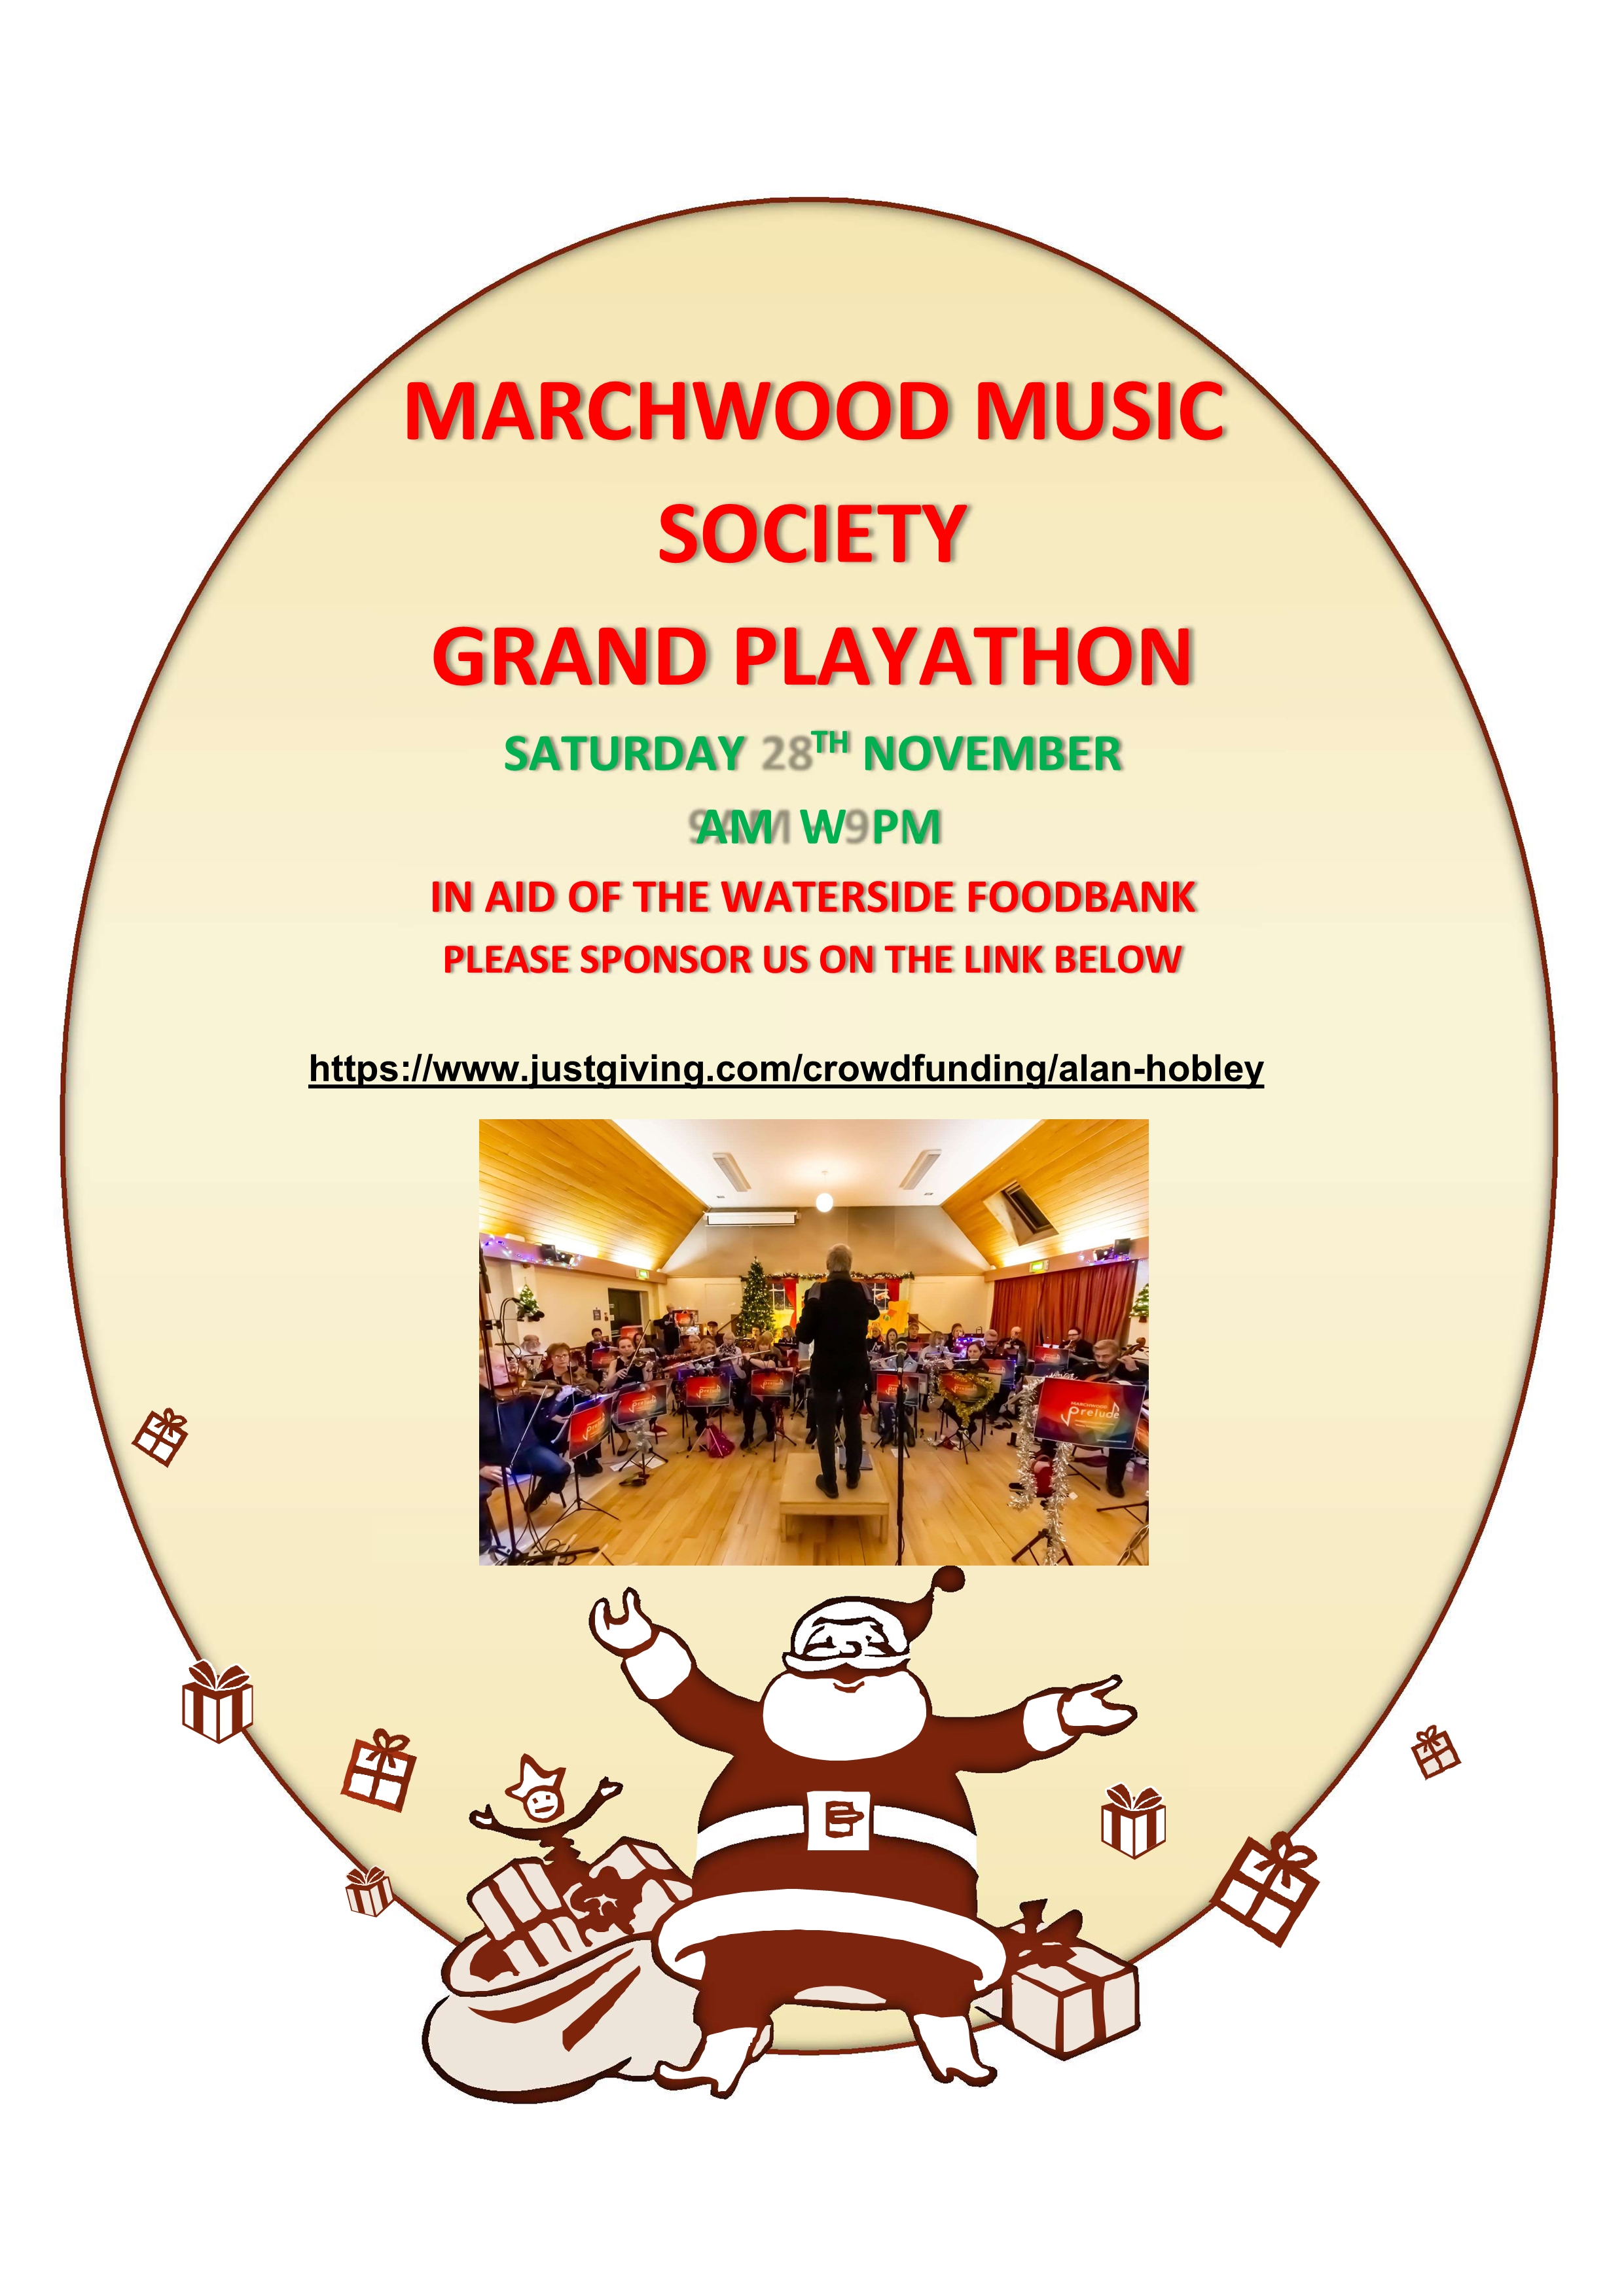 Grand Playathon by Marchwood Music Society